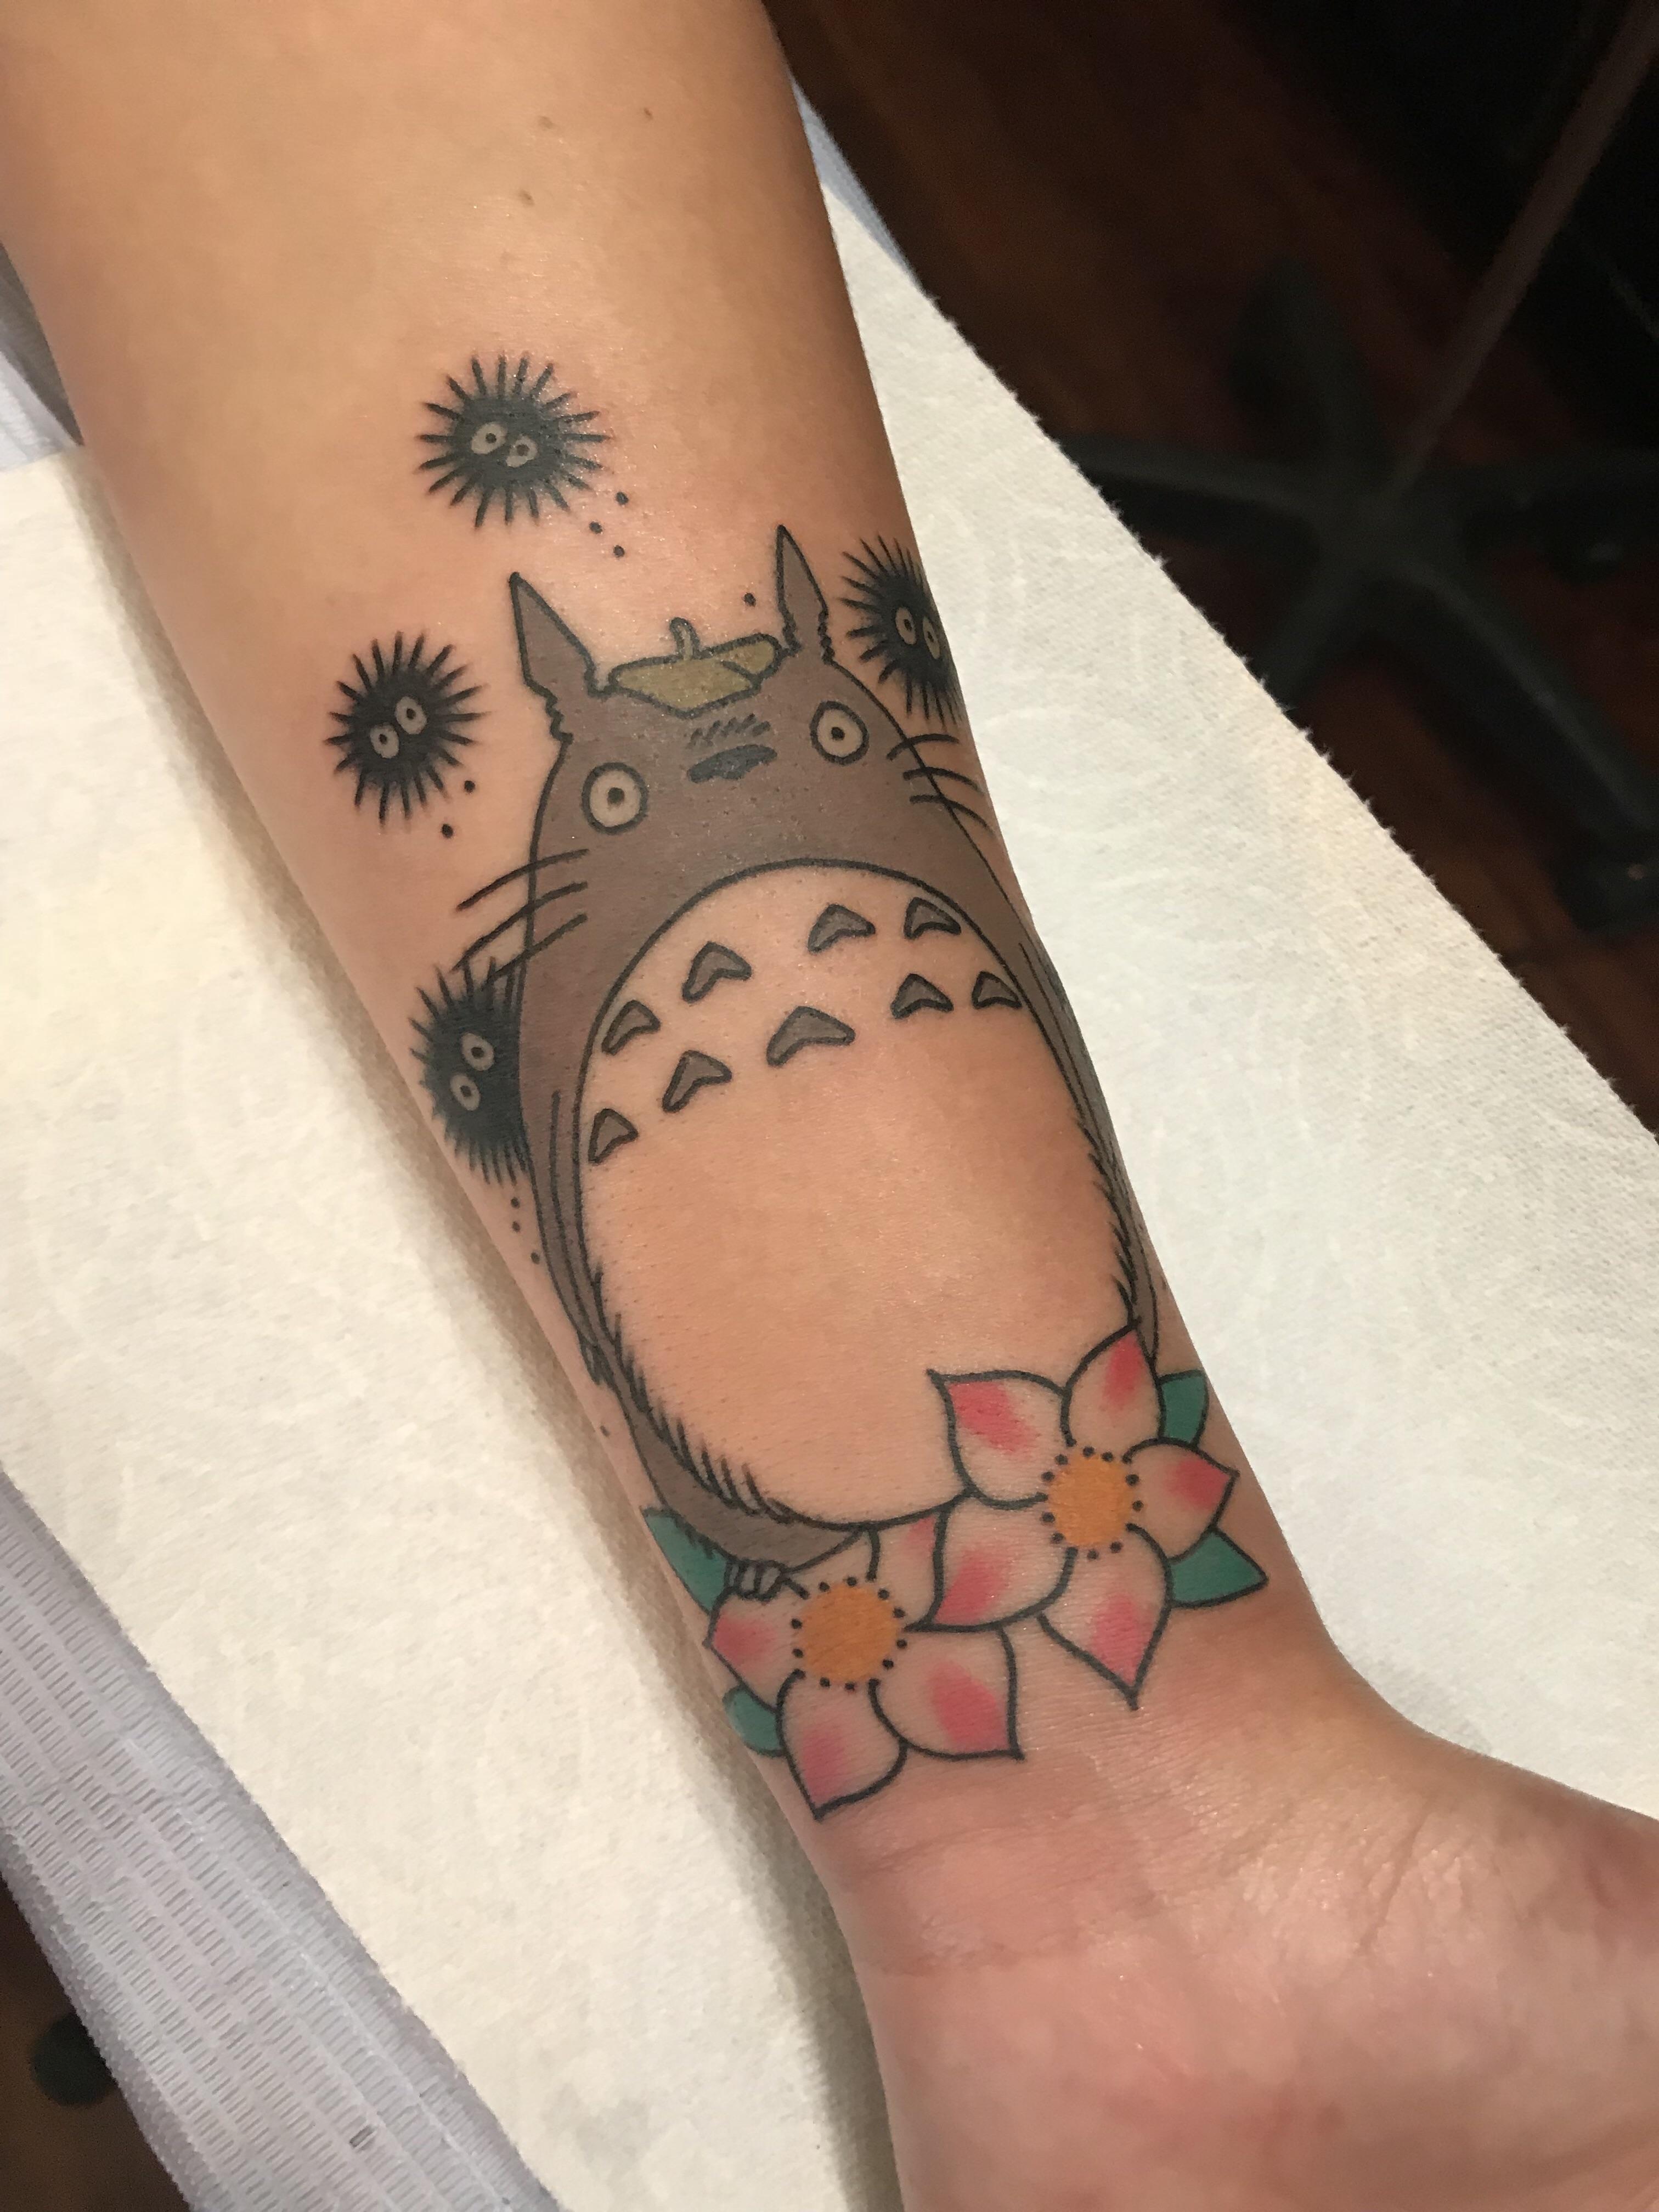 Totoro tattoo avec de petits noiraudes